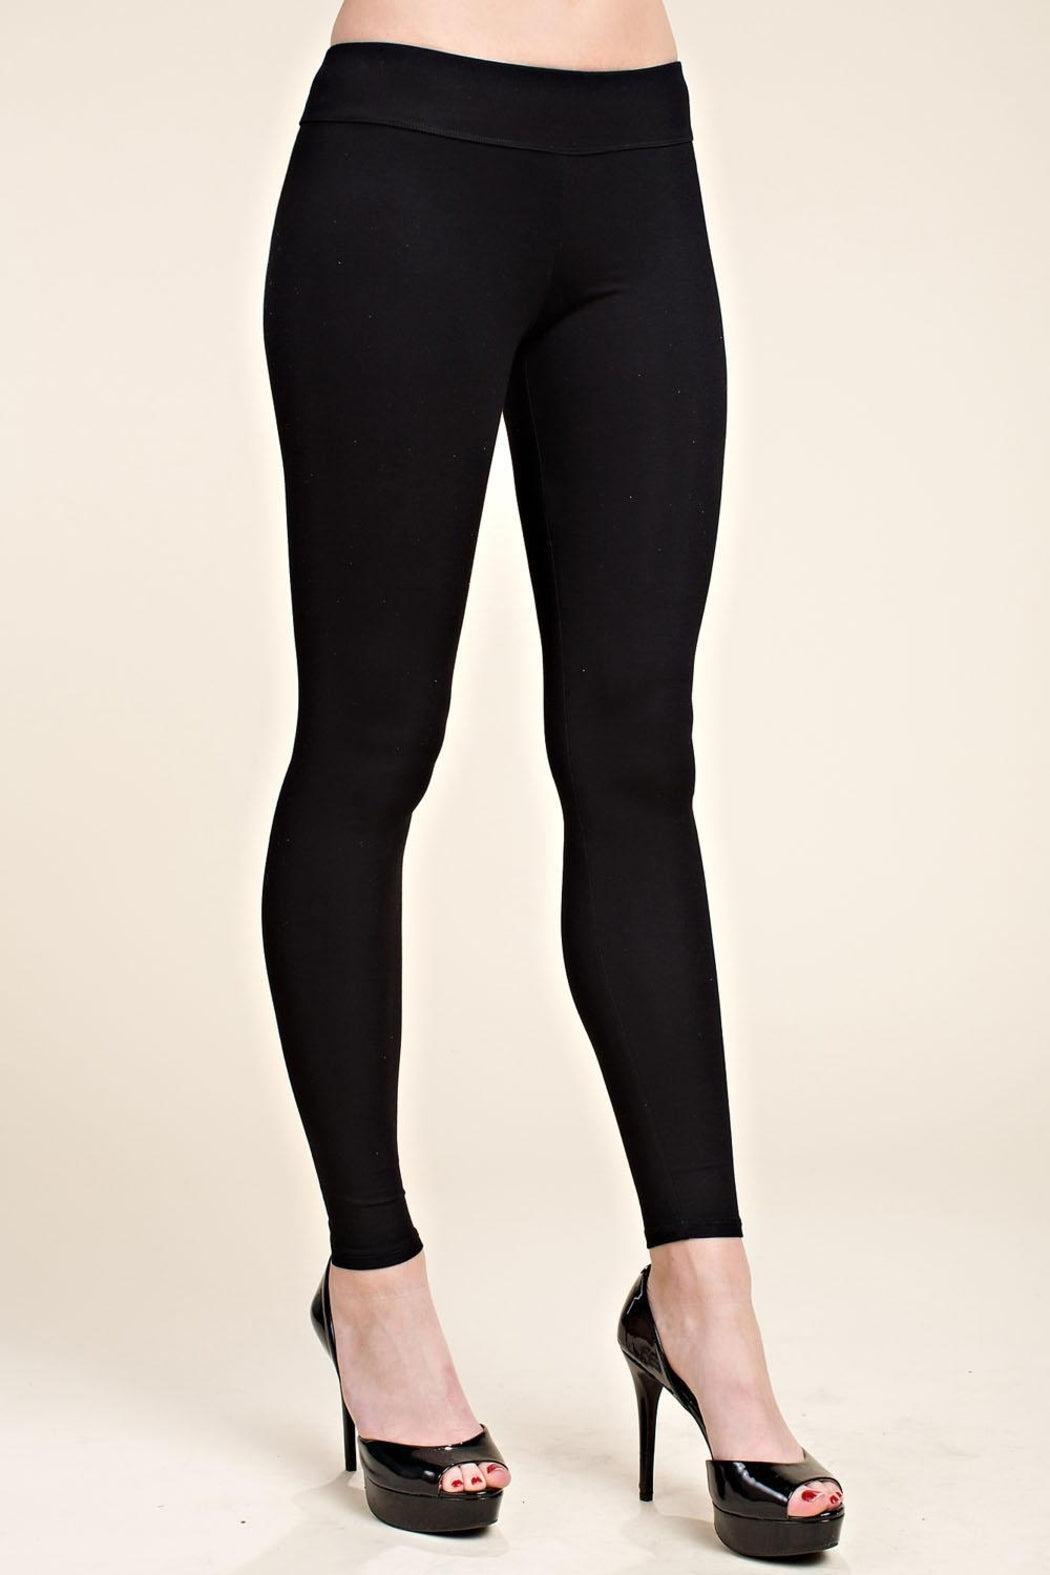 Soft Leggings High Waisted Yoga Pants Product Image